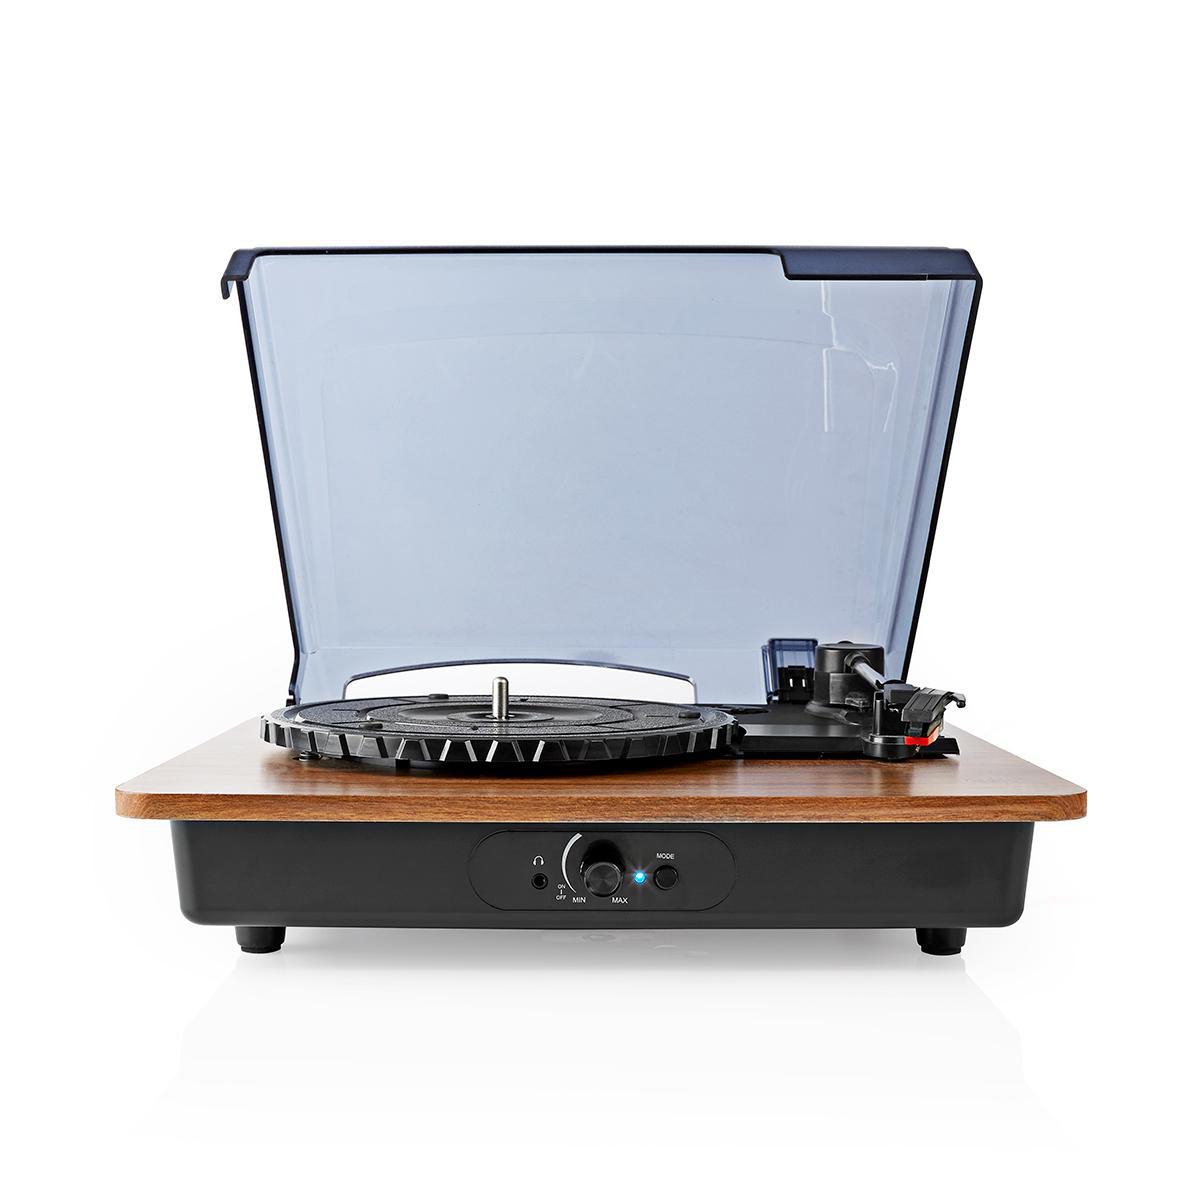 Turntable gramophone Platterspieler BROWN or BLACK for 78 RPM speakers records 